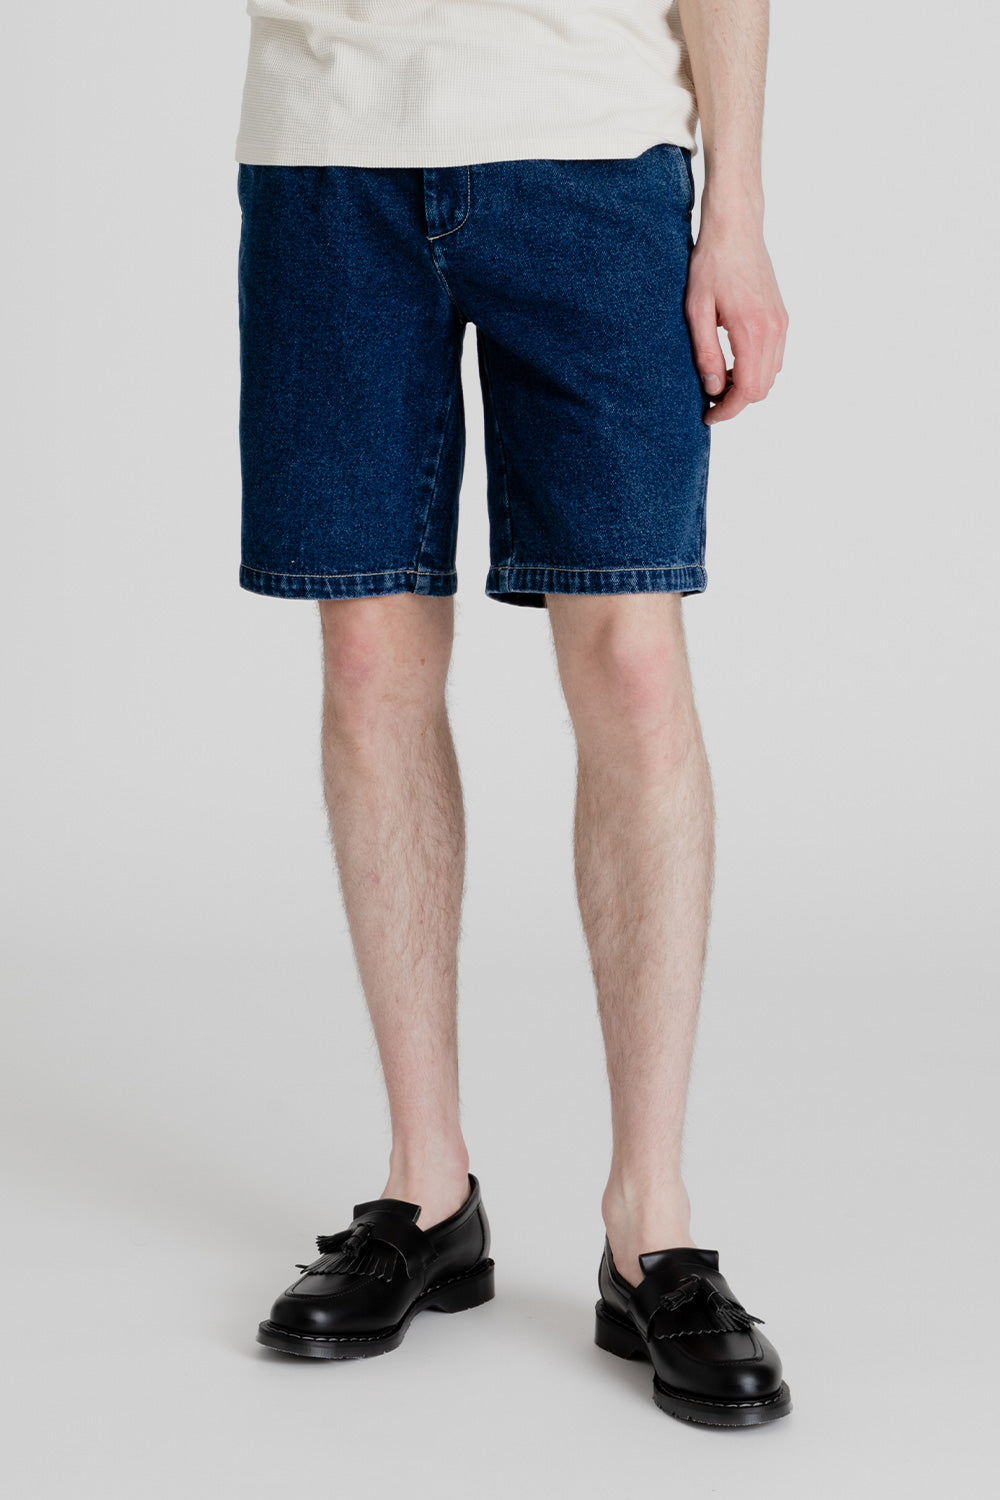 foret-parade-shorts-denim